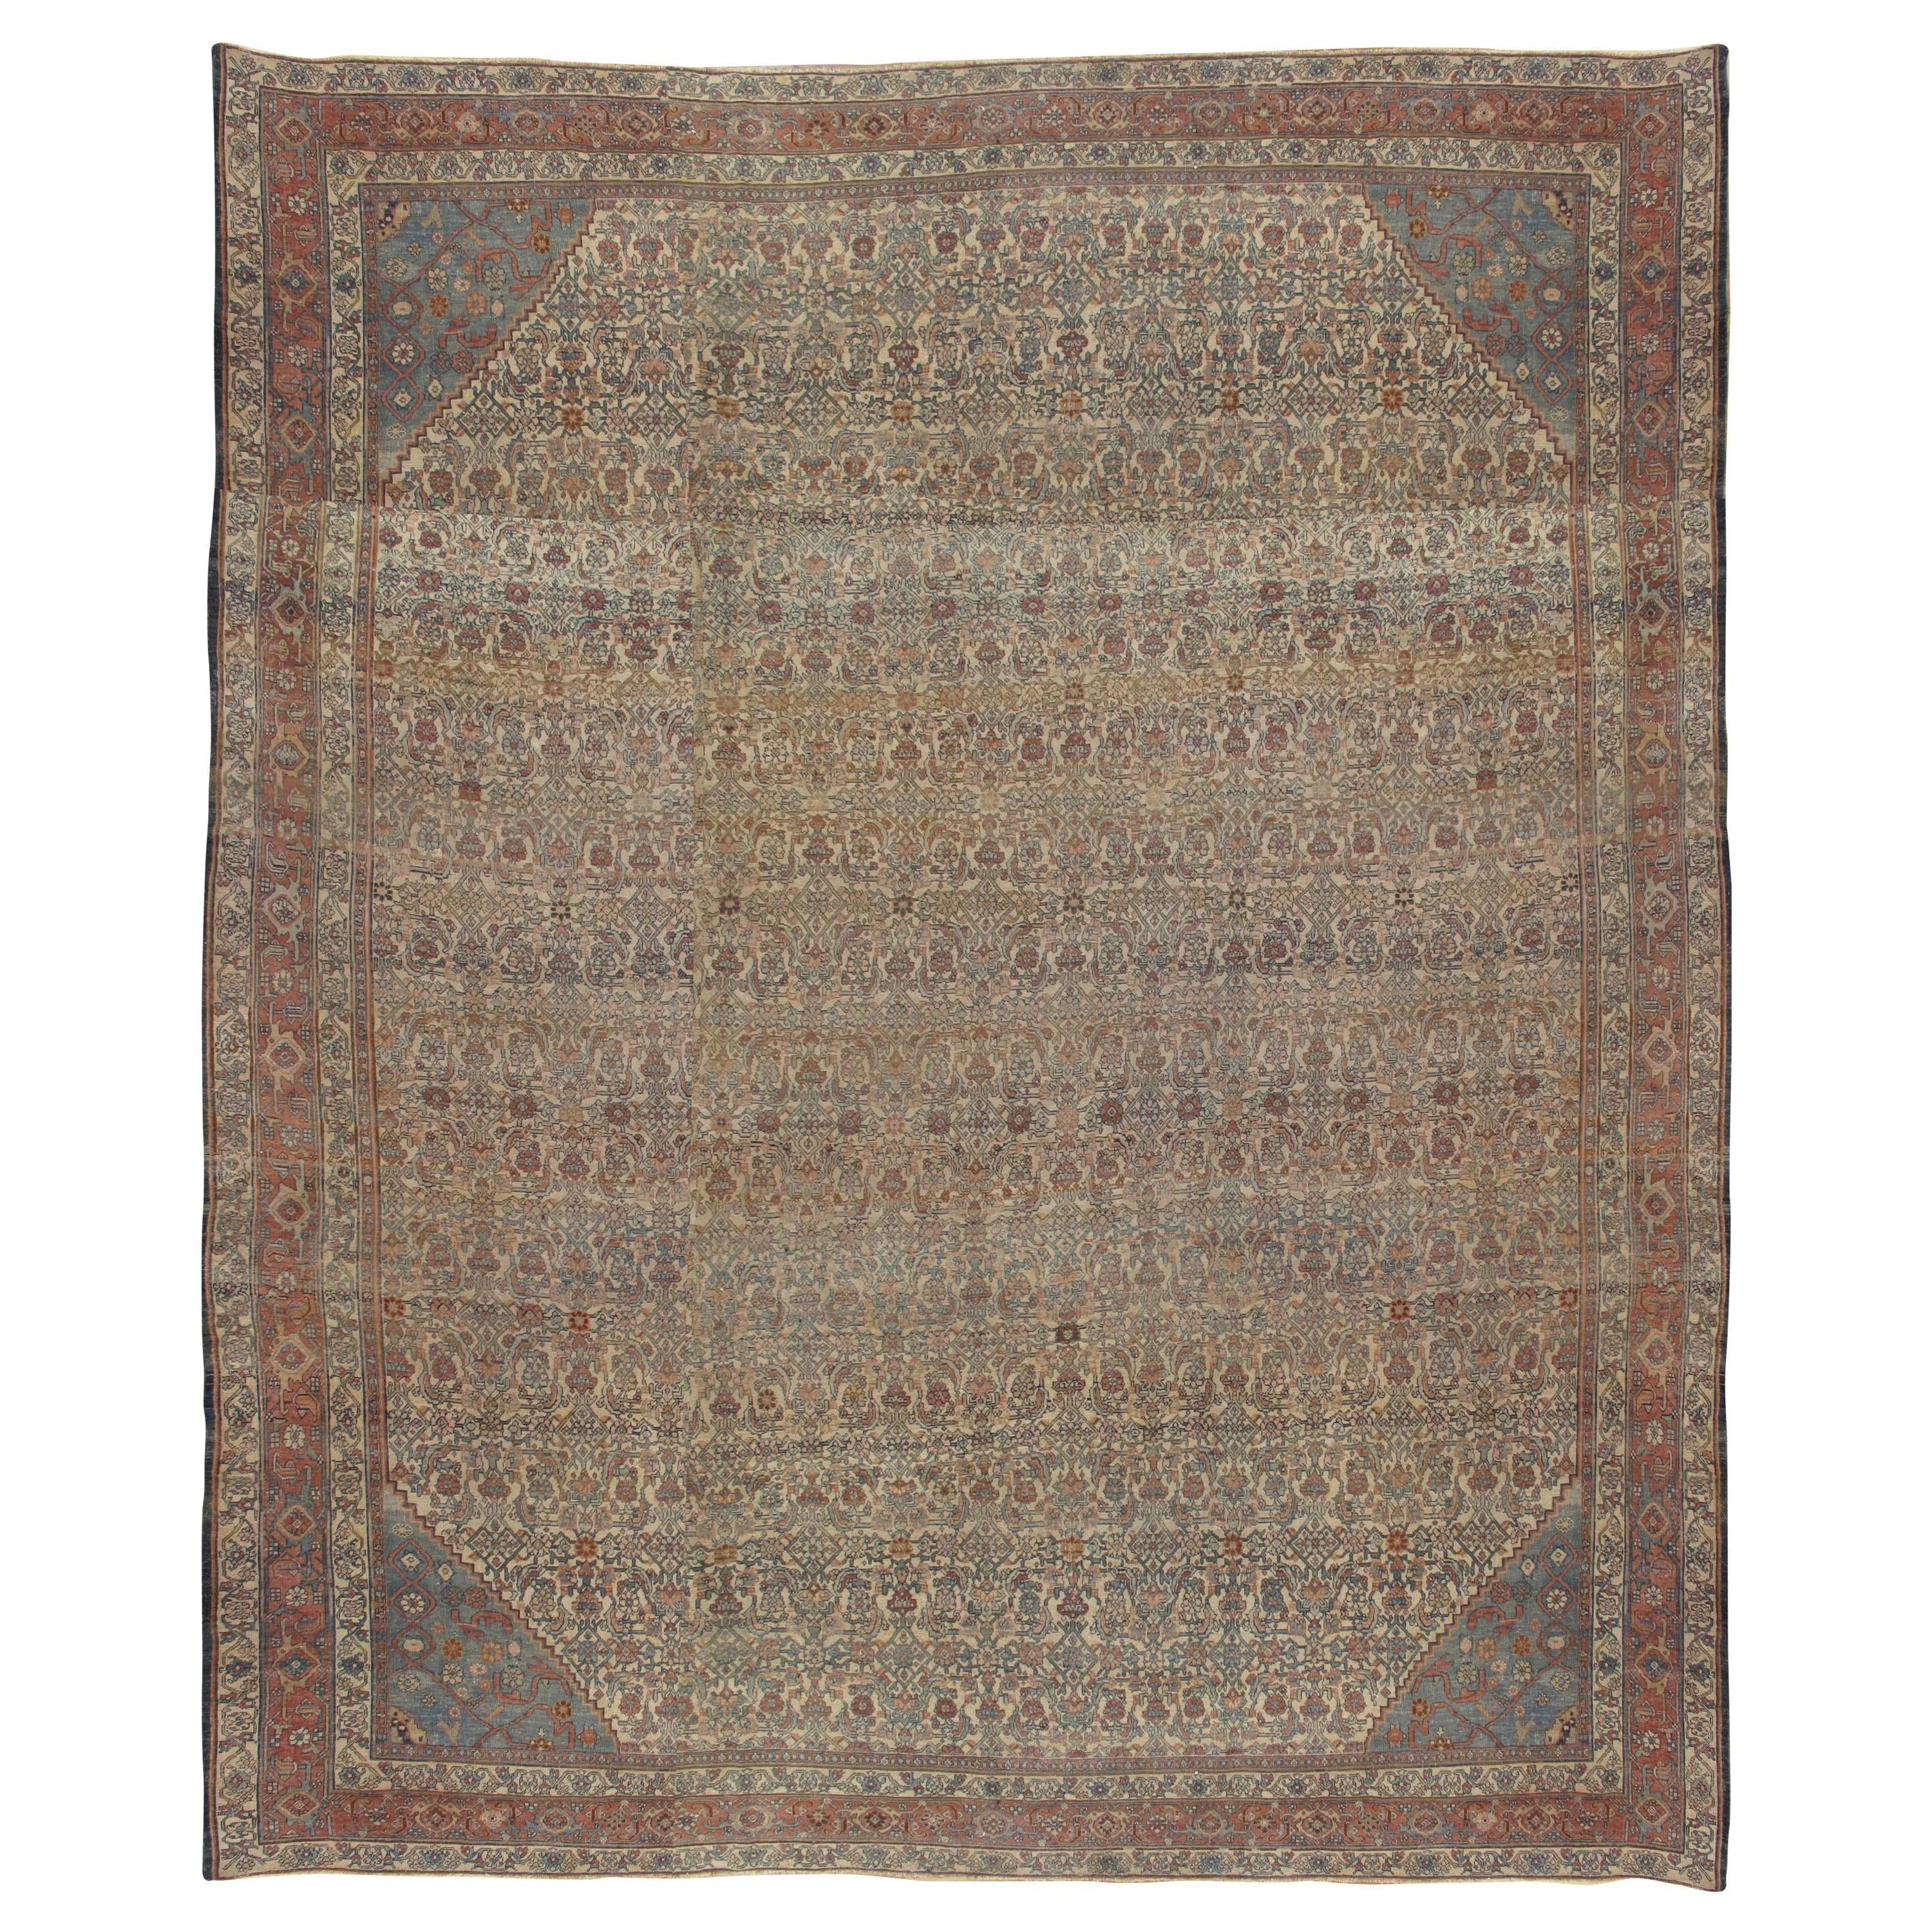 Antique Bijar Carpet Oriental Rug, Handmade, Ivory and Light Blue, Terracotta